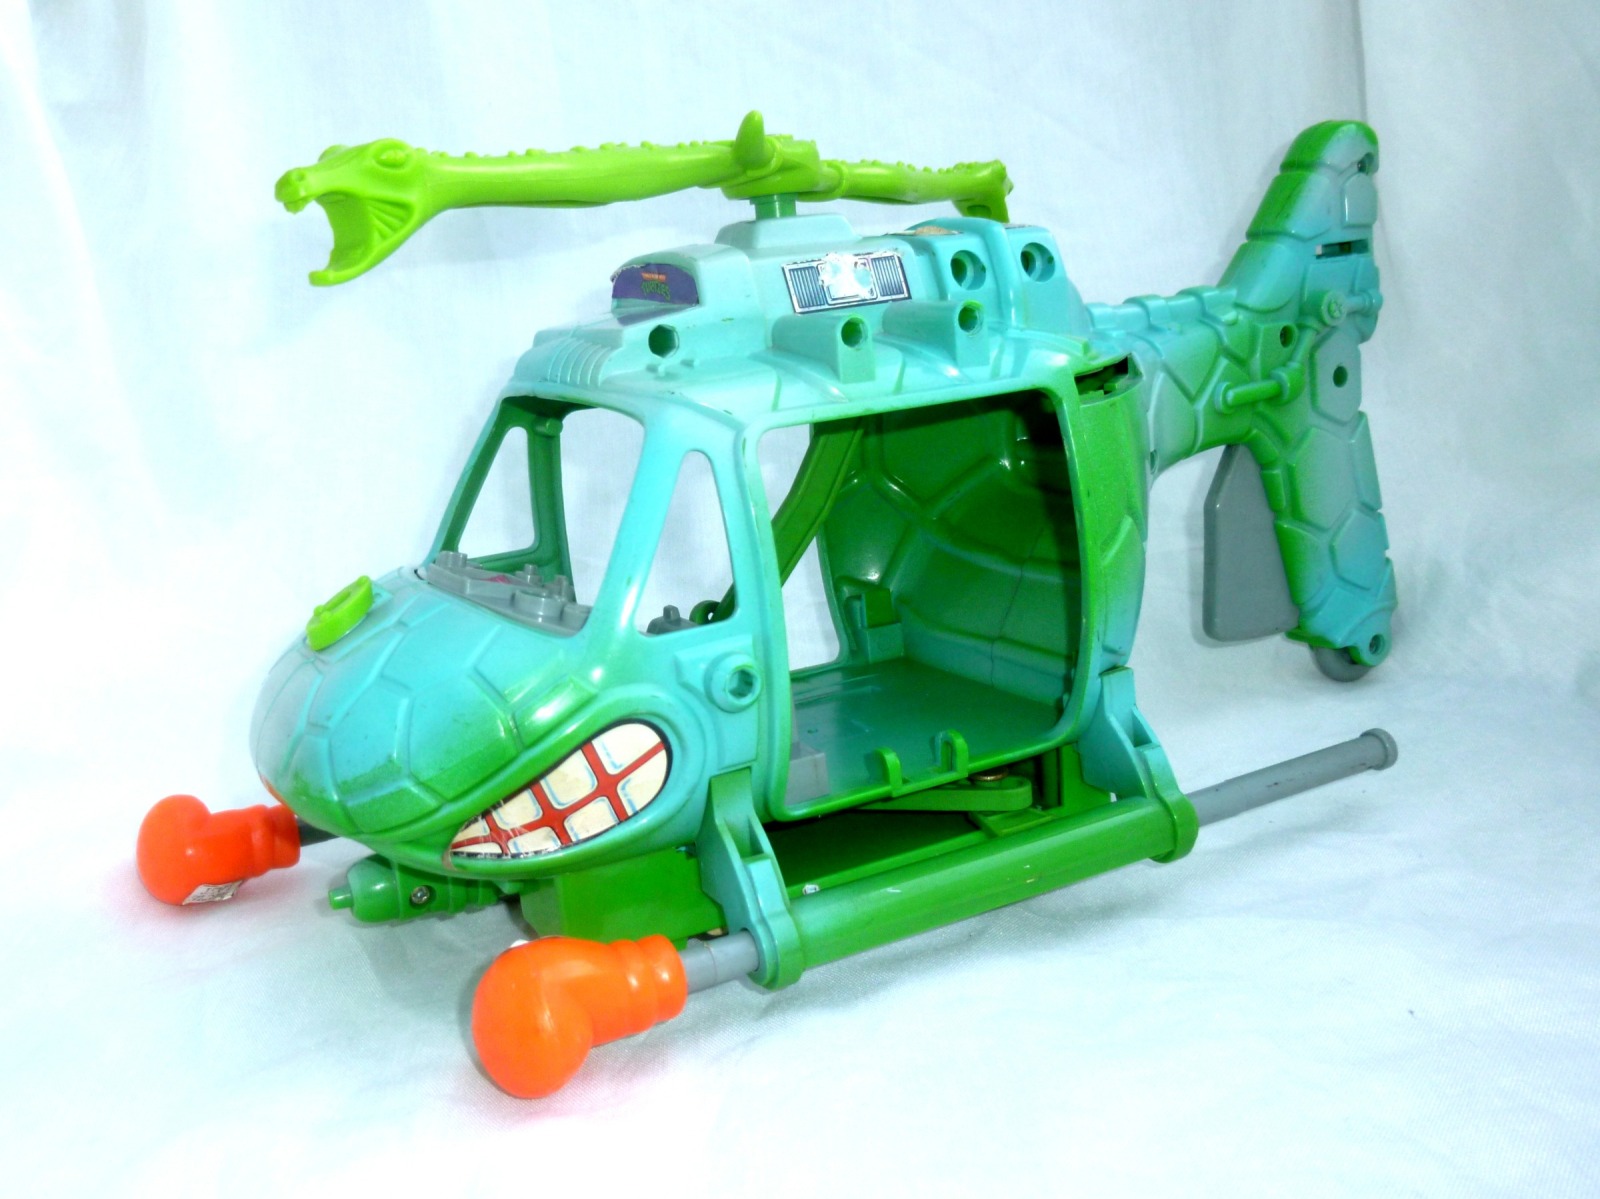 Turtlecopter - The Gooey Green Gunship 1991 Mirage Studios / Playmates Toys 2